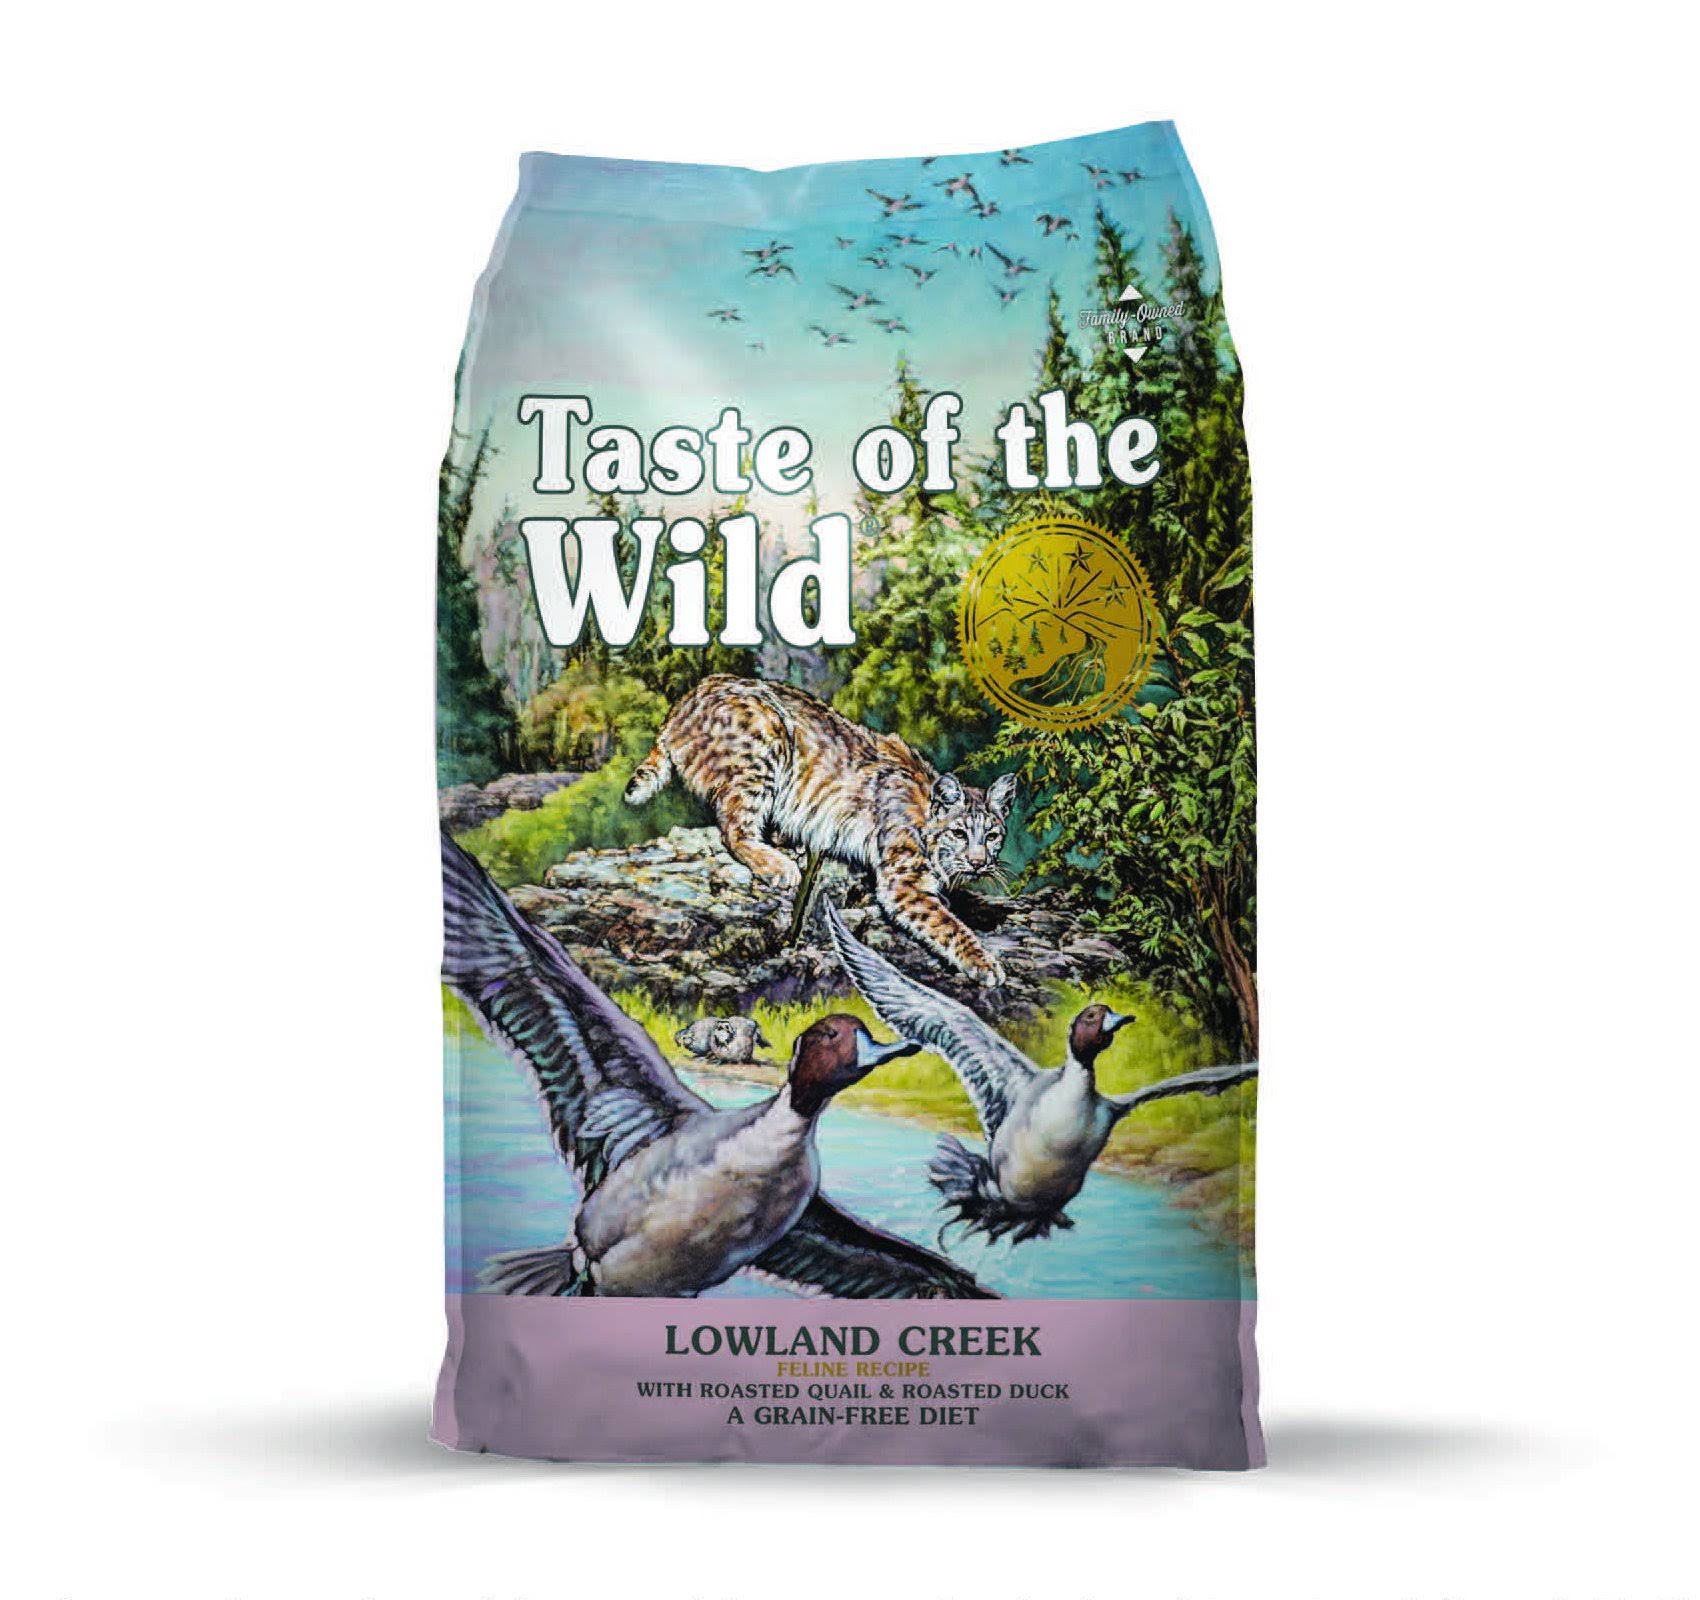 Taste of The Wild Lowland Creek Grain Free Quail & Roasted Duck Cat Food - 14 lb